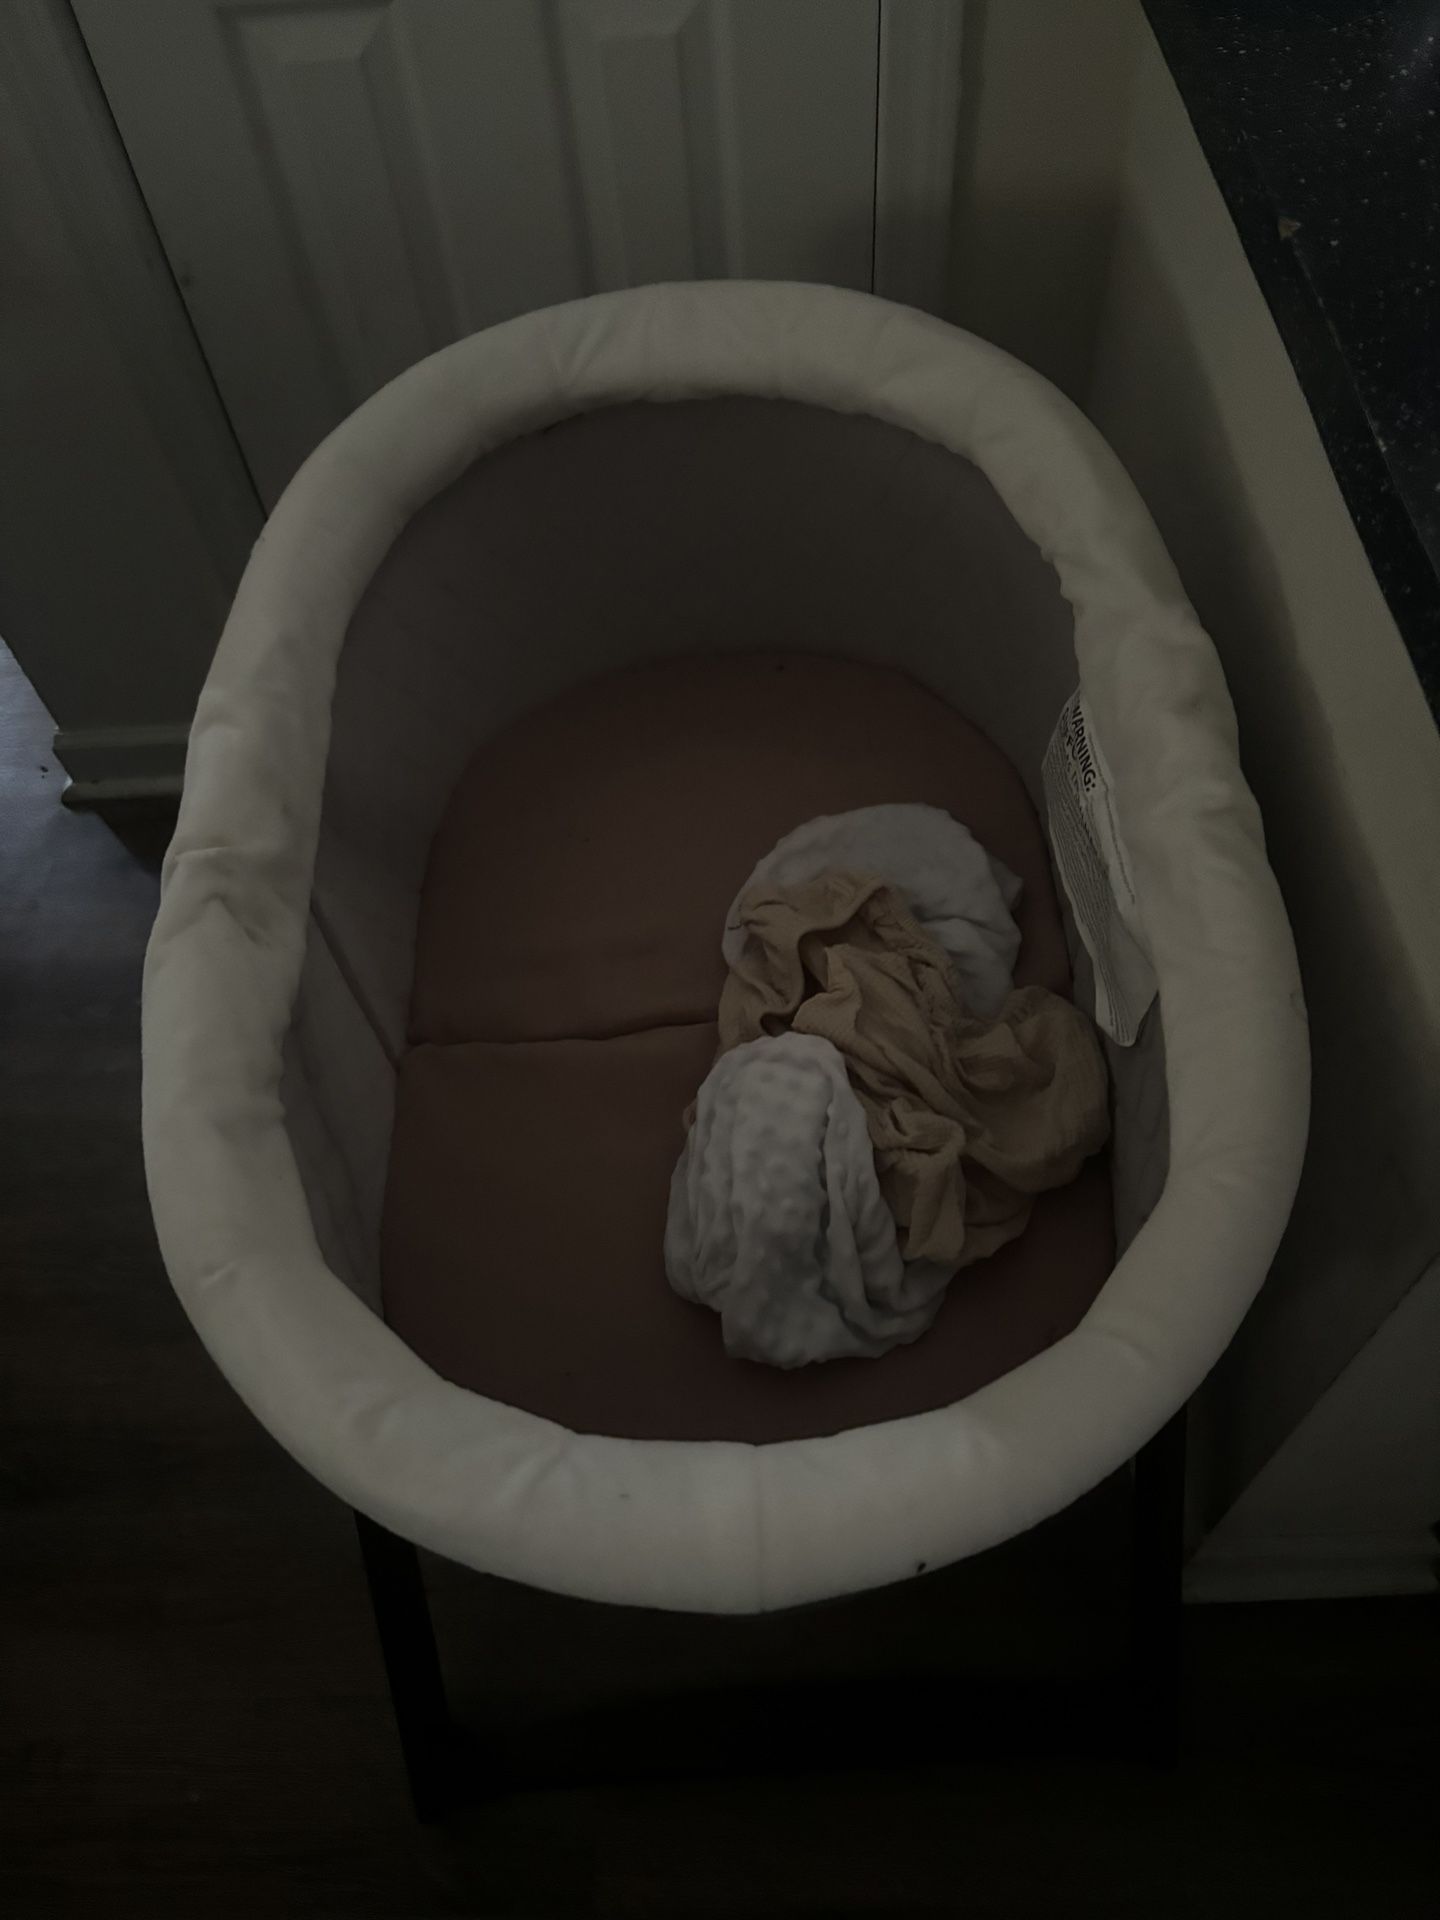 baby bassinet 